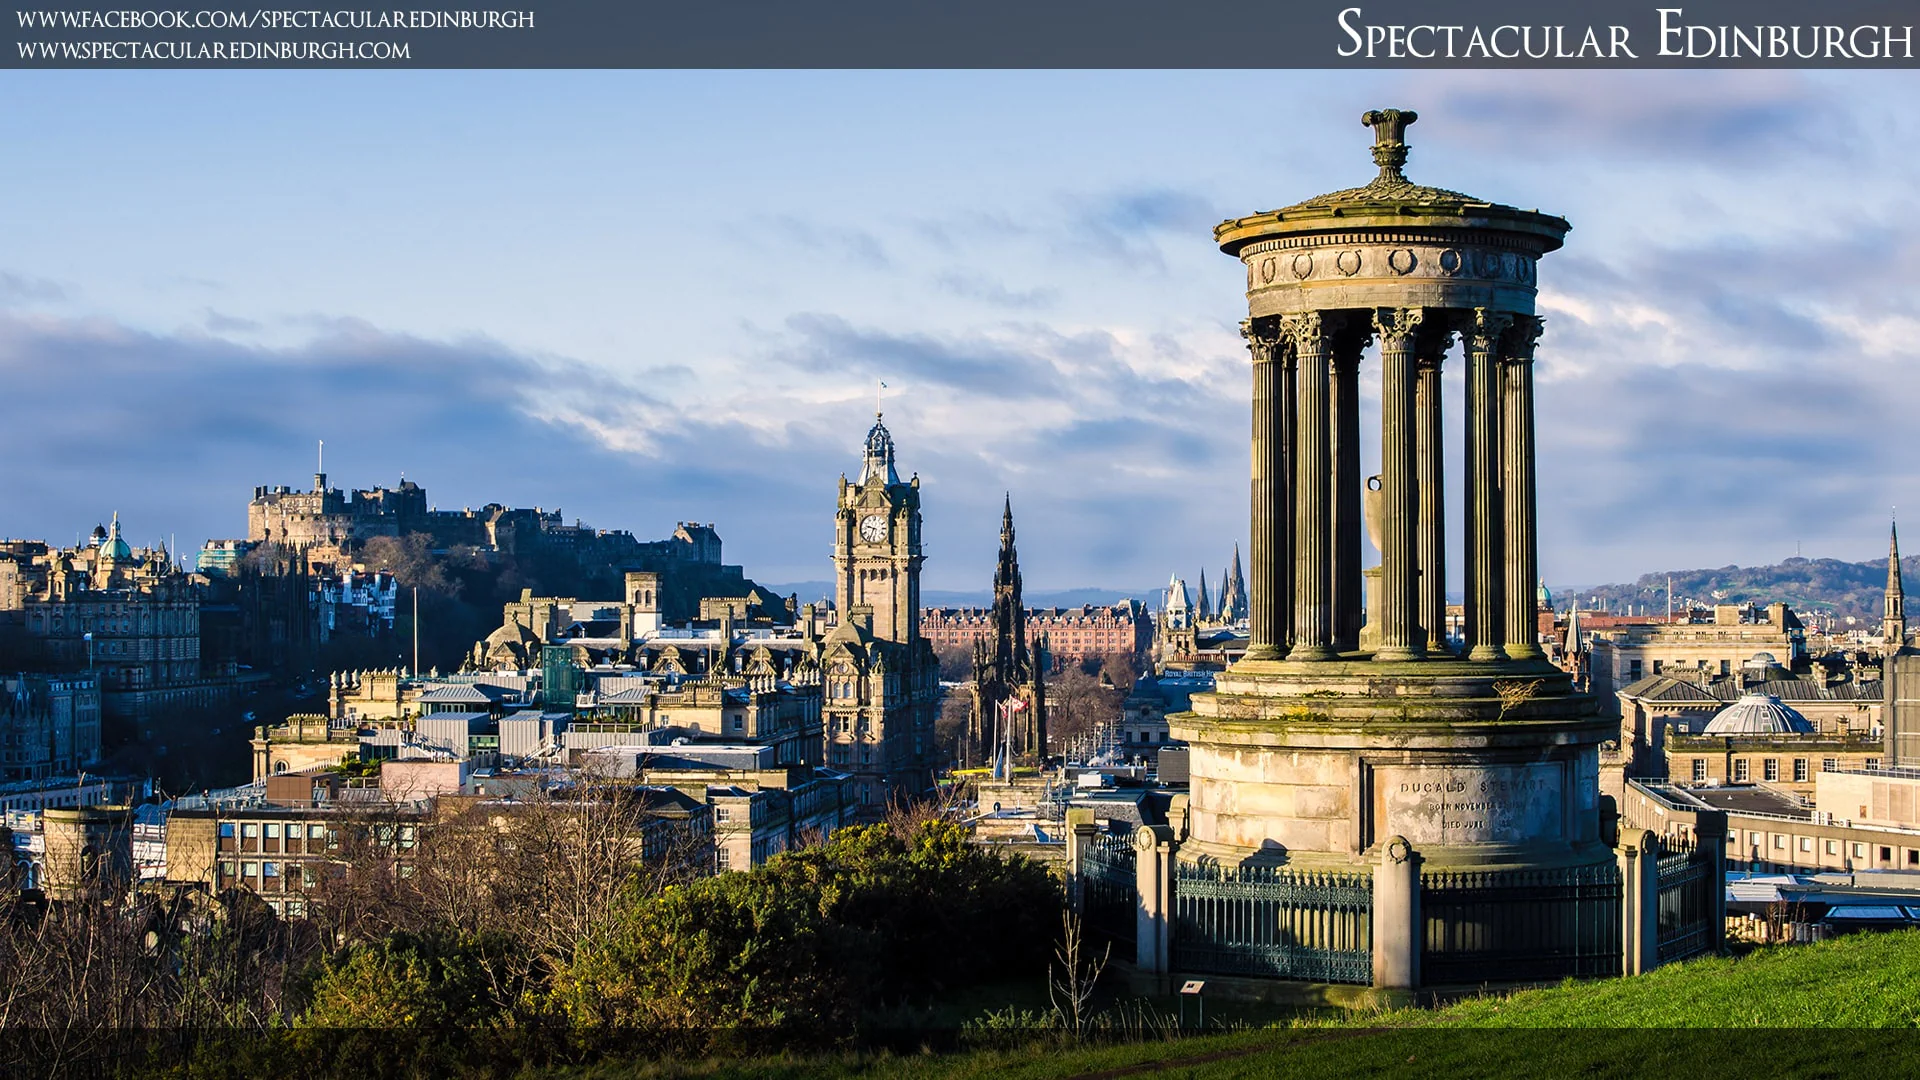 Wallpaper 9 - A Classic Calton View - Spectacular Edinburgh Photography